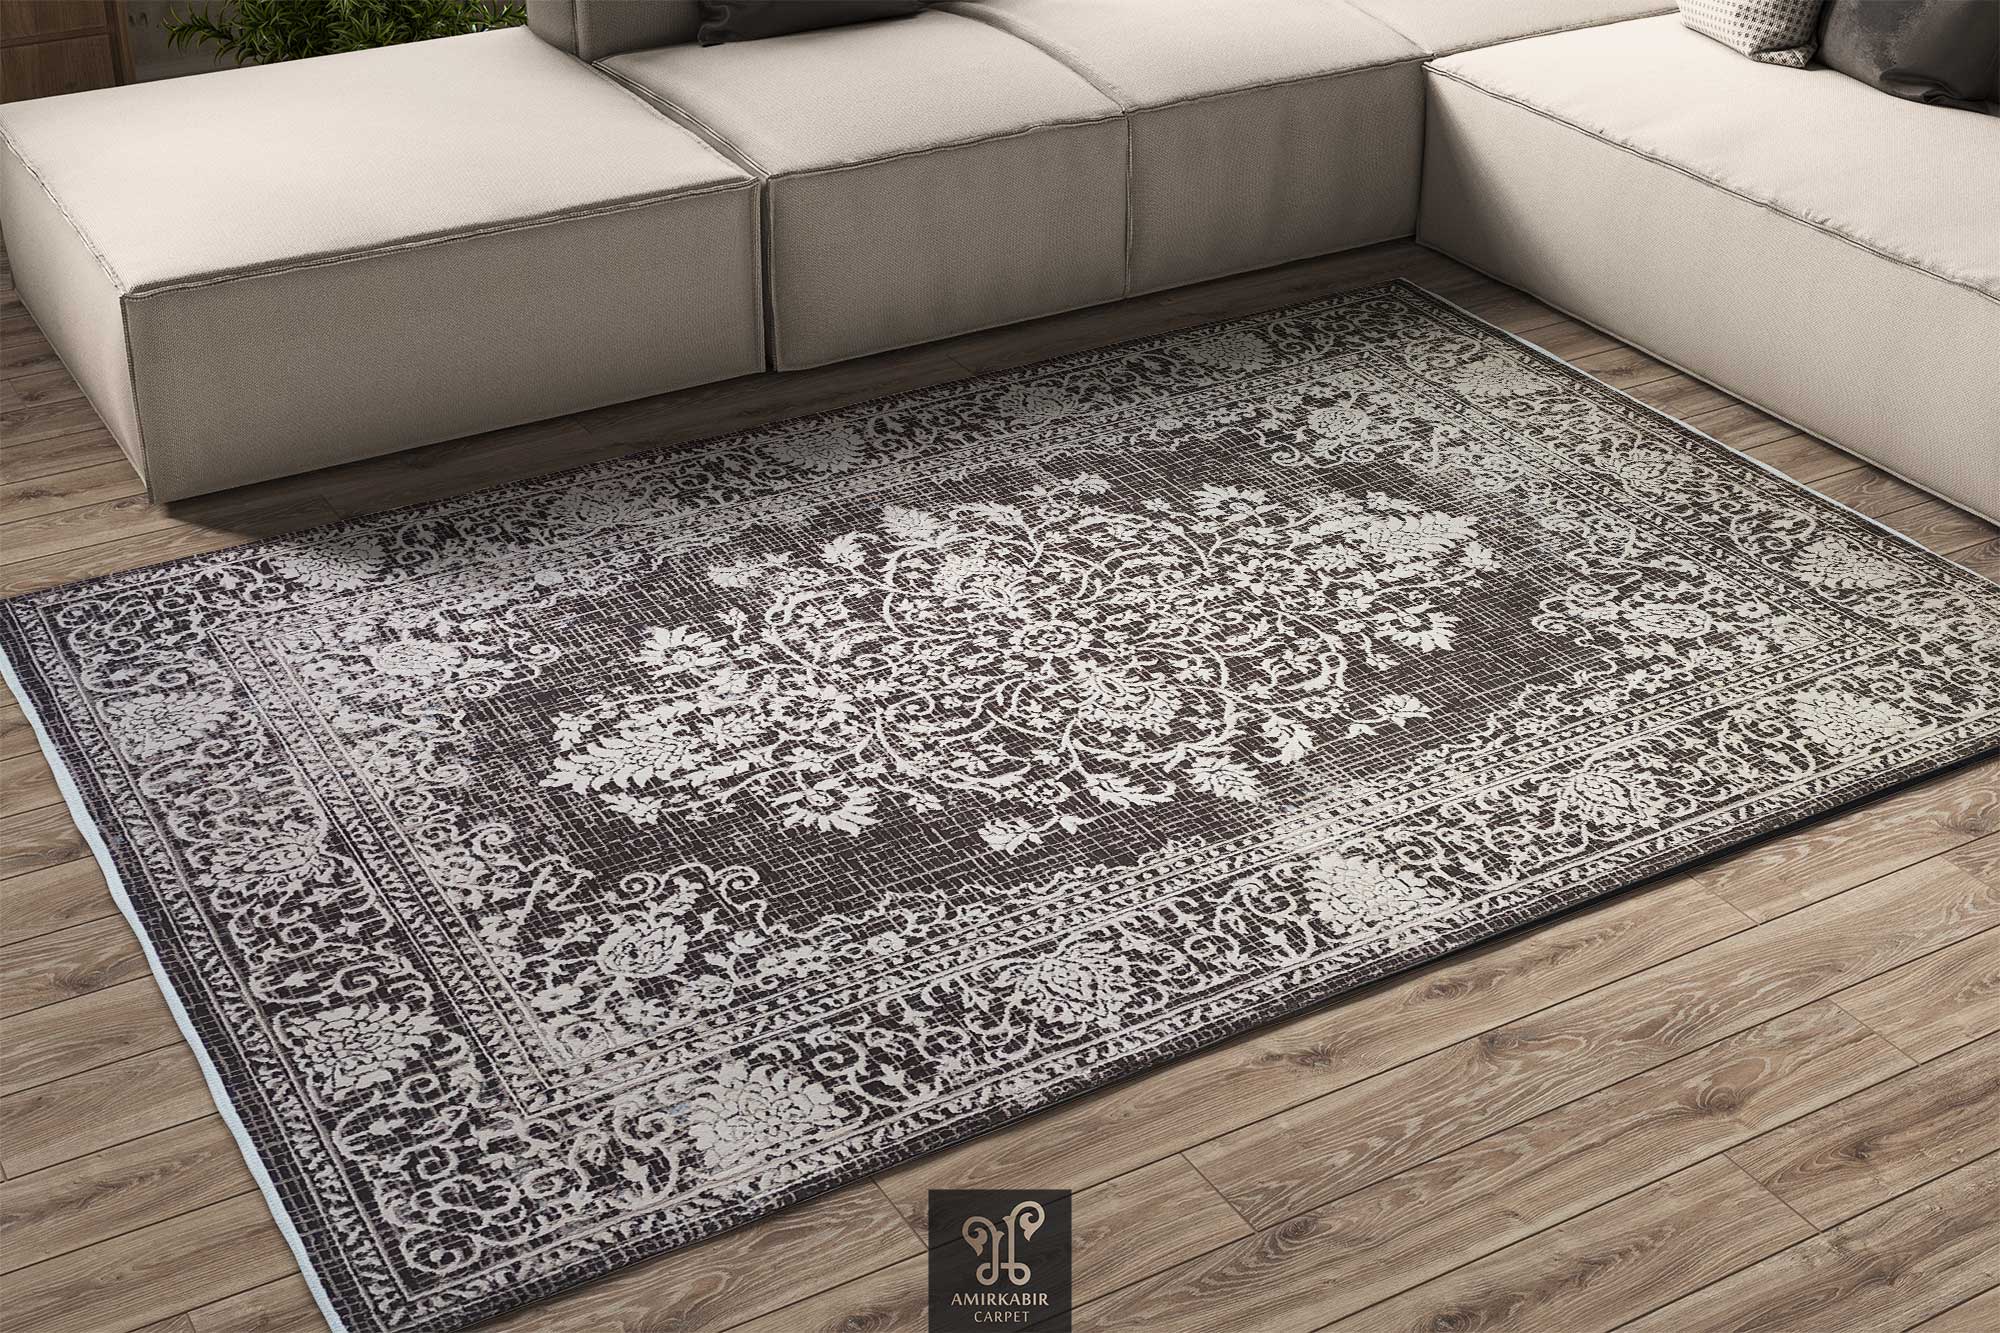 Vintage 400 reeds carpet -1400 Density RUG - Modern Carpet - Harmony Carpet 1188 Brown